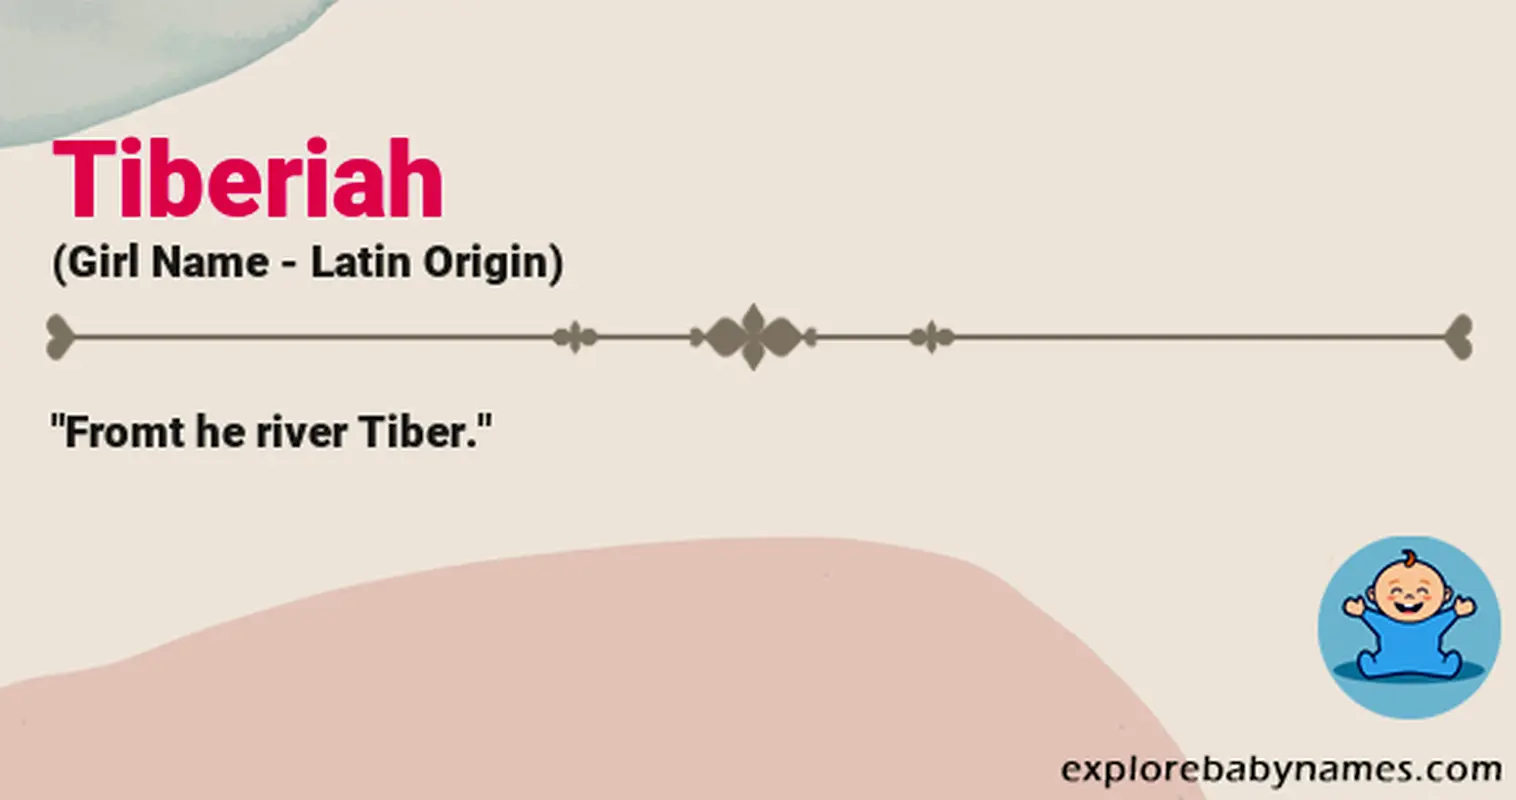 Meaning of Tiberiah